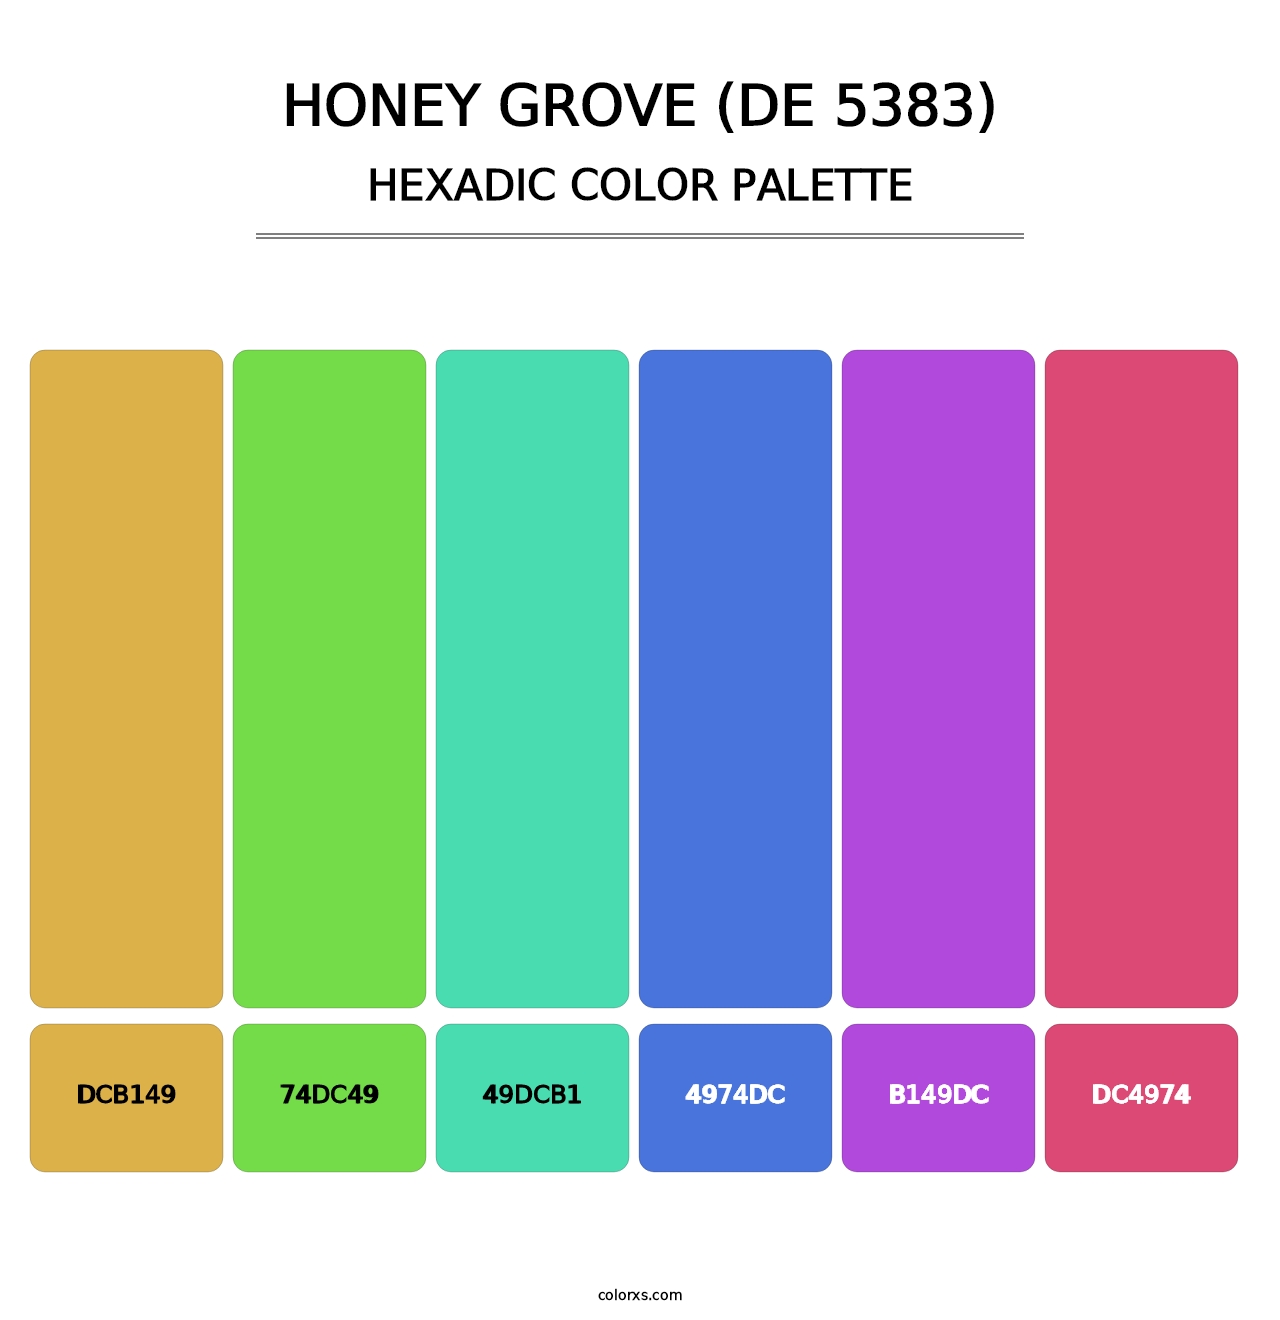 Honey Grove (DE 5383) - Hexadic Color Palette